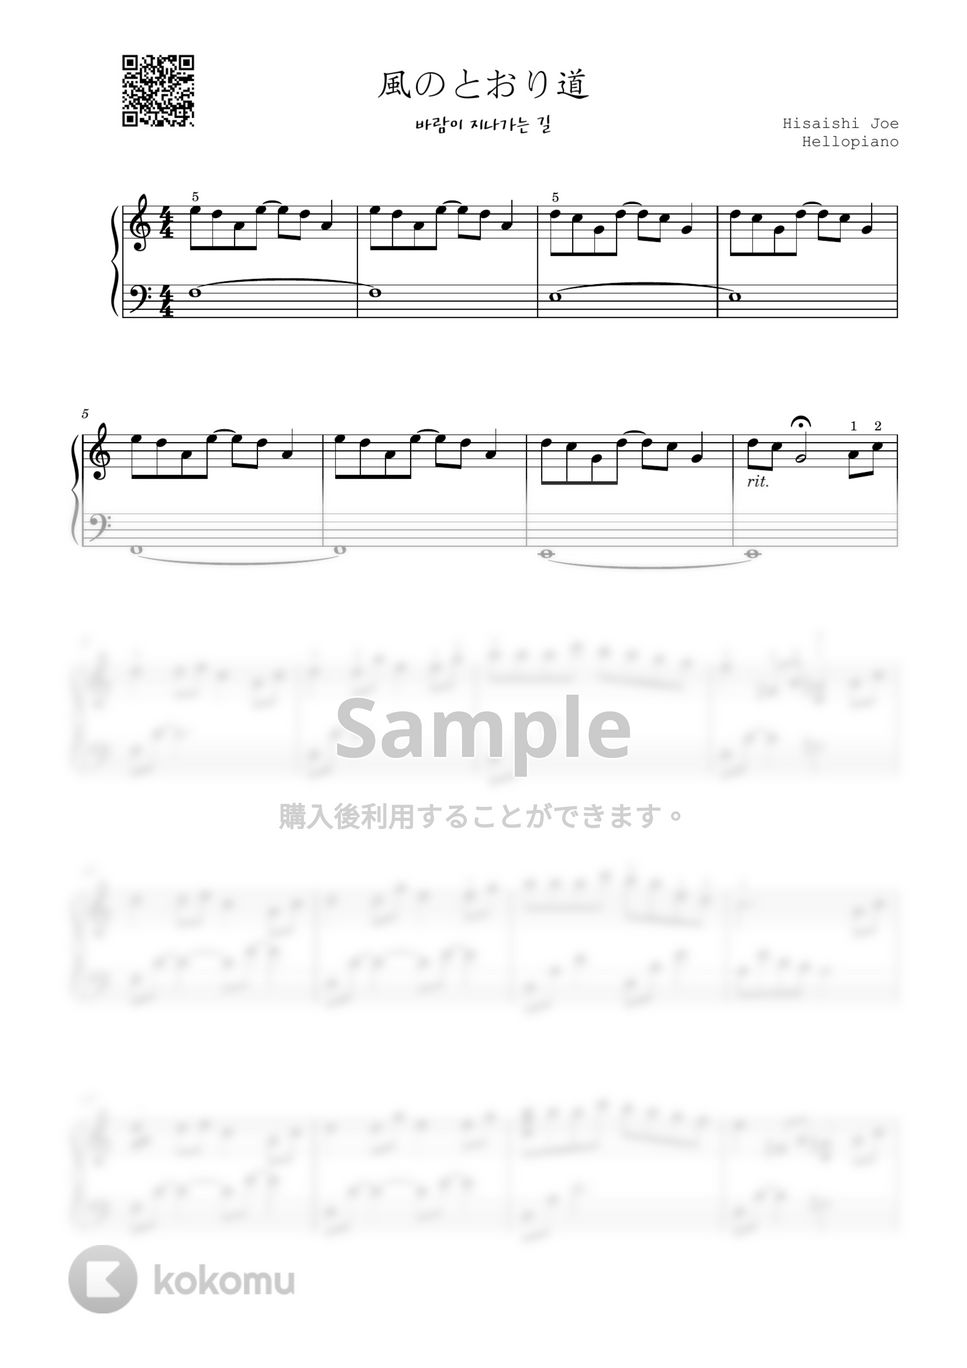 Hisaishi joe - 風のとおり道 (となりのトトロ OST) by hellopiano